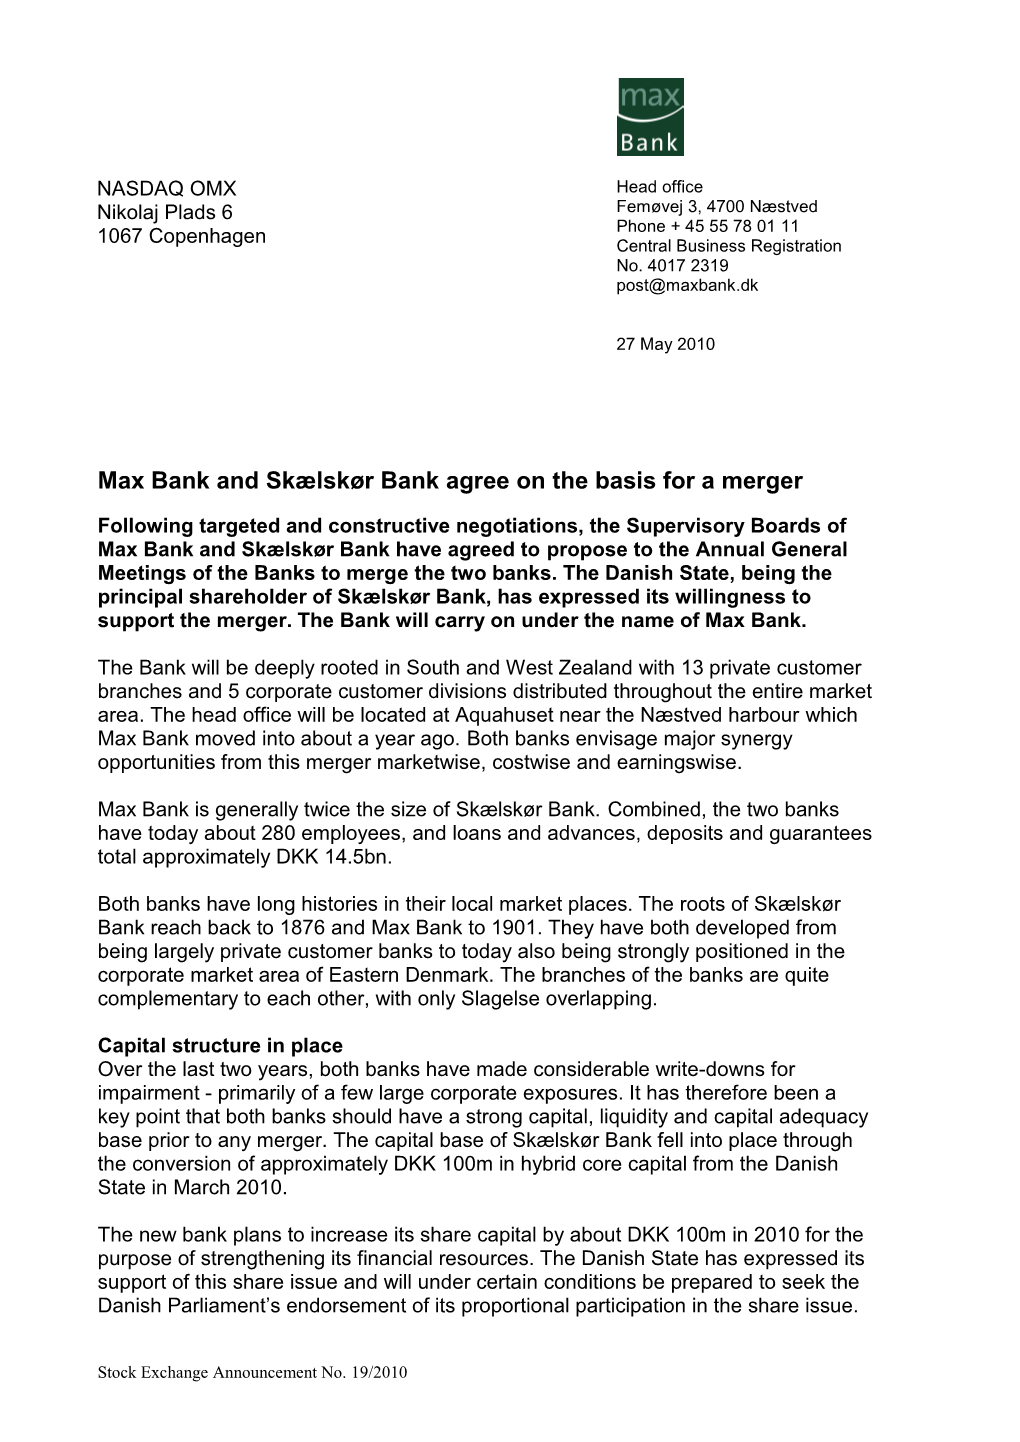 Max Bank and Skælskør Bank Agree on the Basis for a Merger